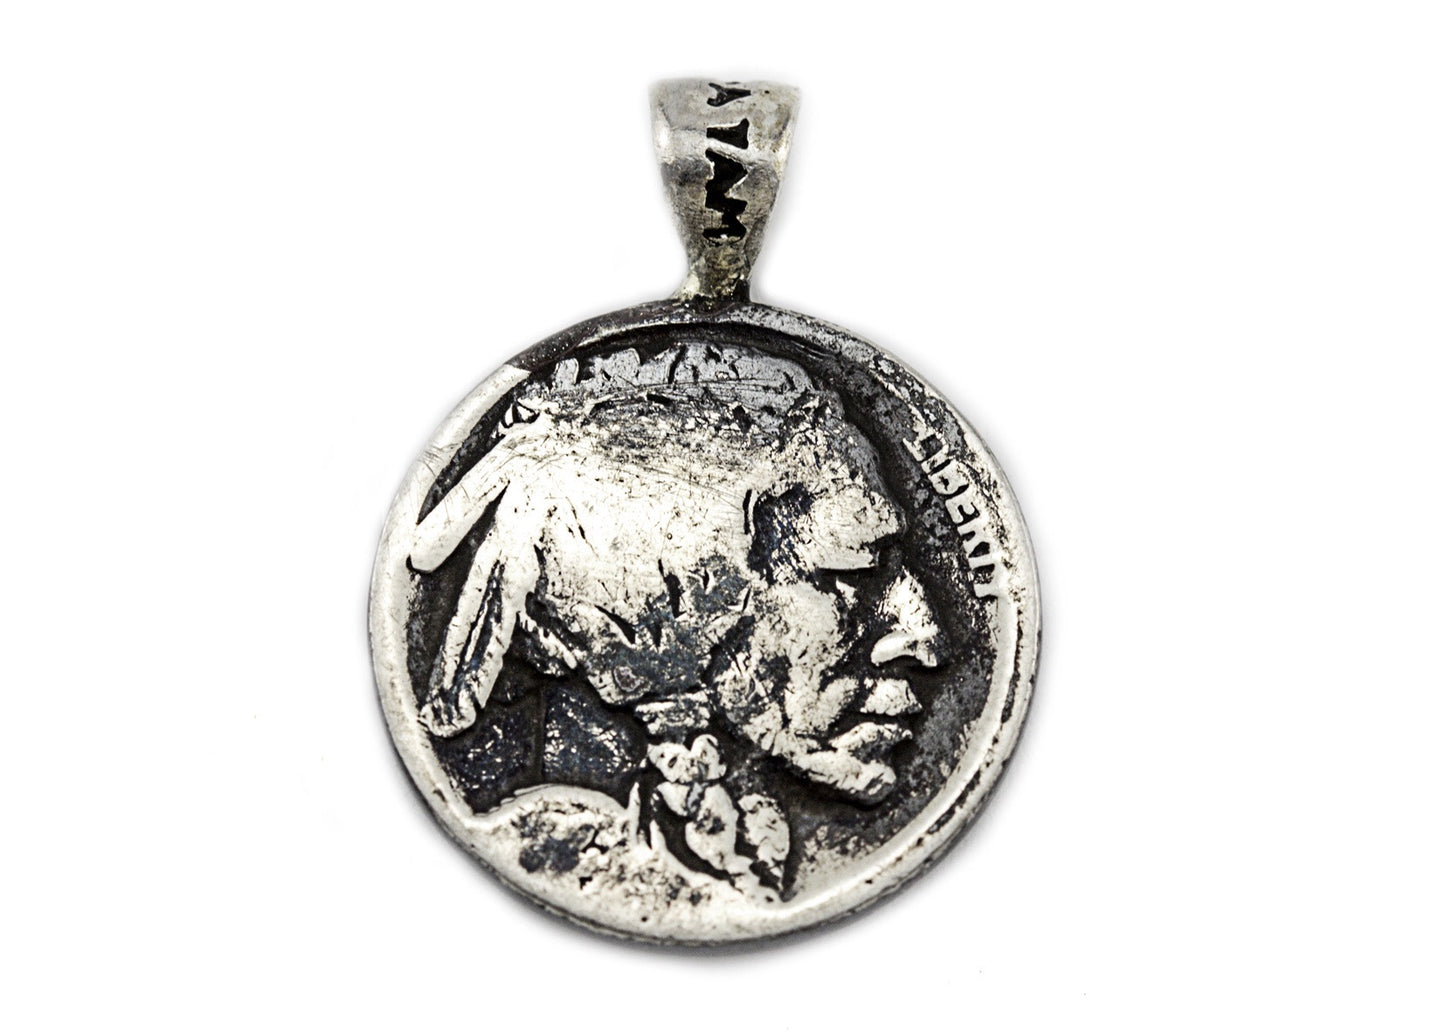 Heart Coin and Buffalo Nickel Necklace, Indian necklace, Open Heart Pendant, Bohemian Pendant, Handmade Pendant, Coin Chain